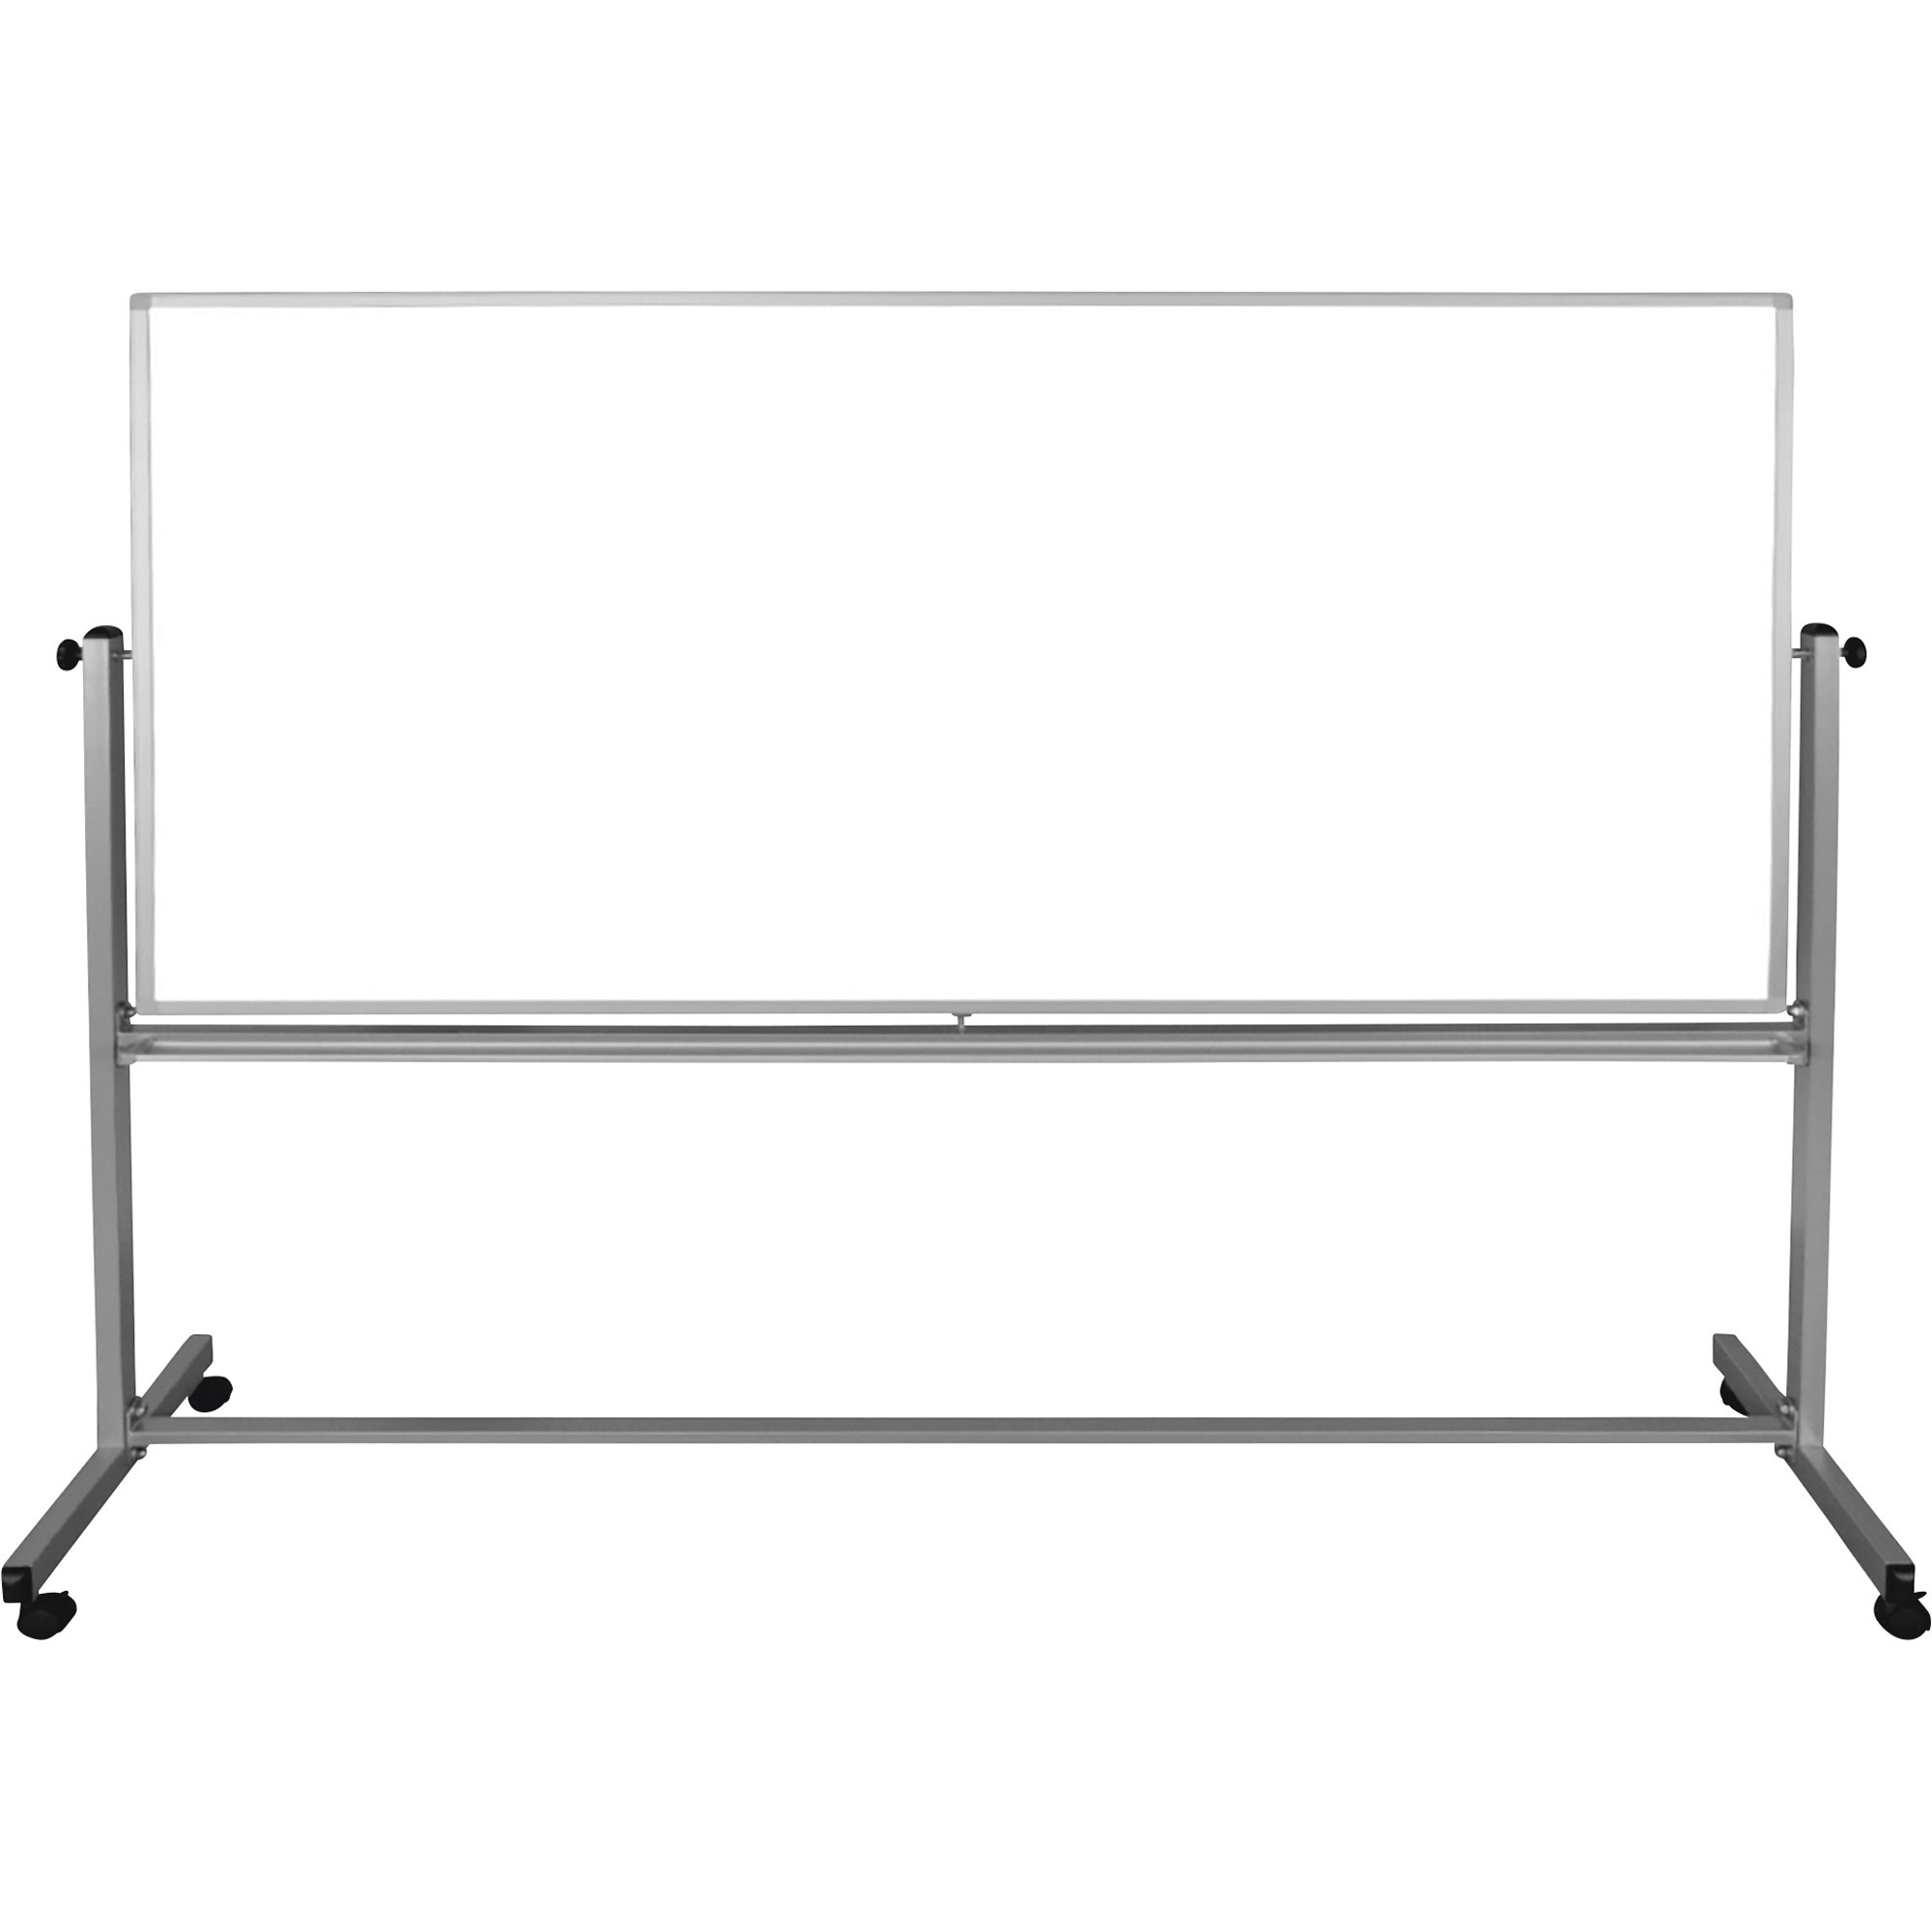 Double-Sided Whiteboard — Gray/White, 99Inch W x 23Inch D x 69Inch H, Model - Luxor MB9640WW